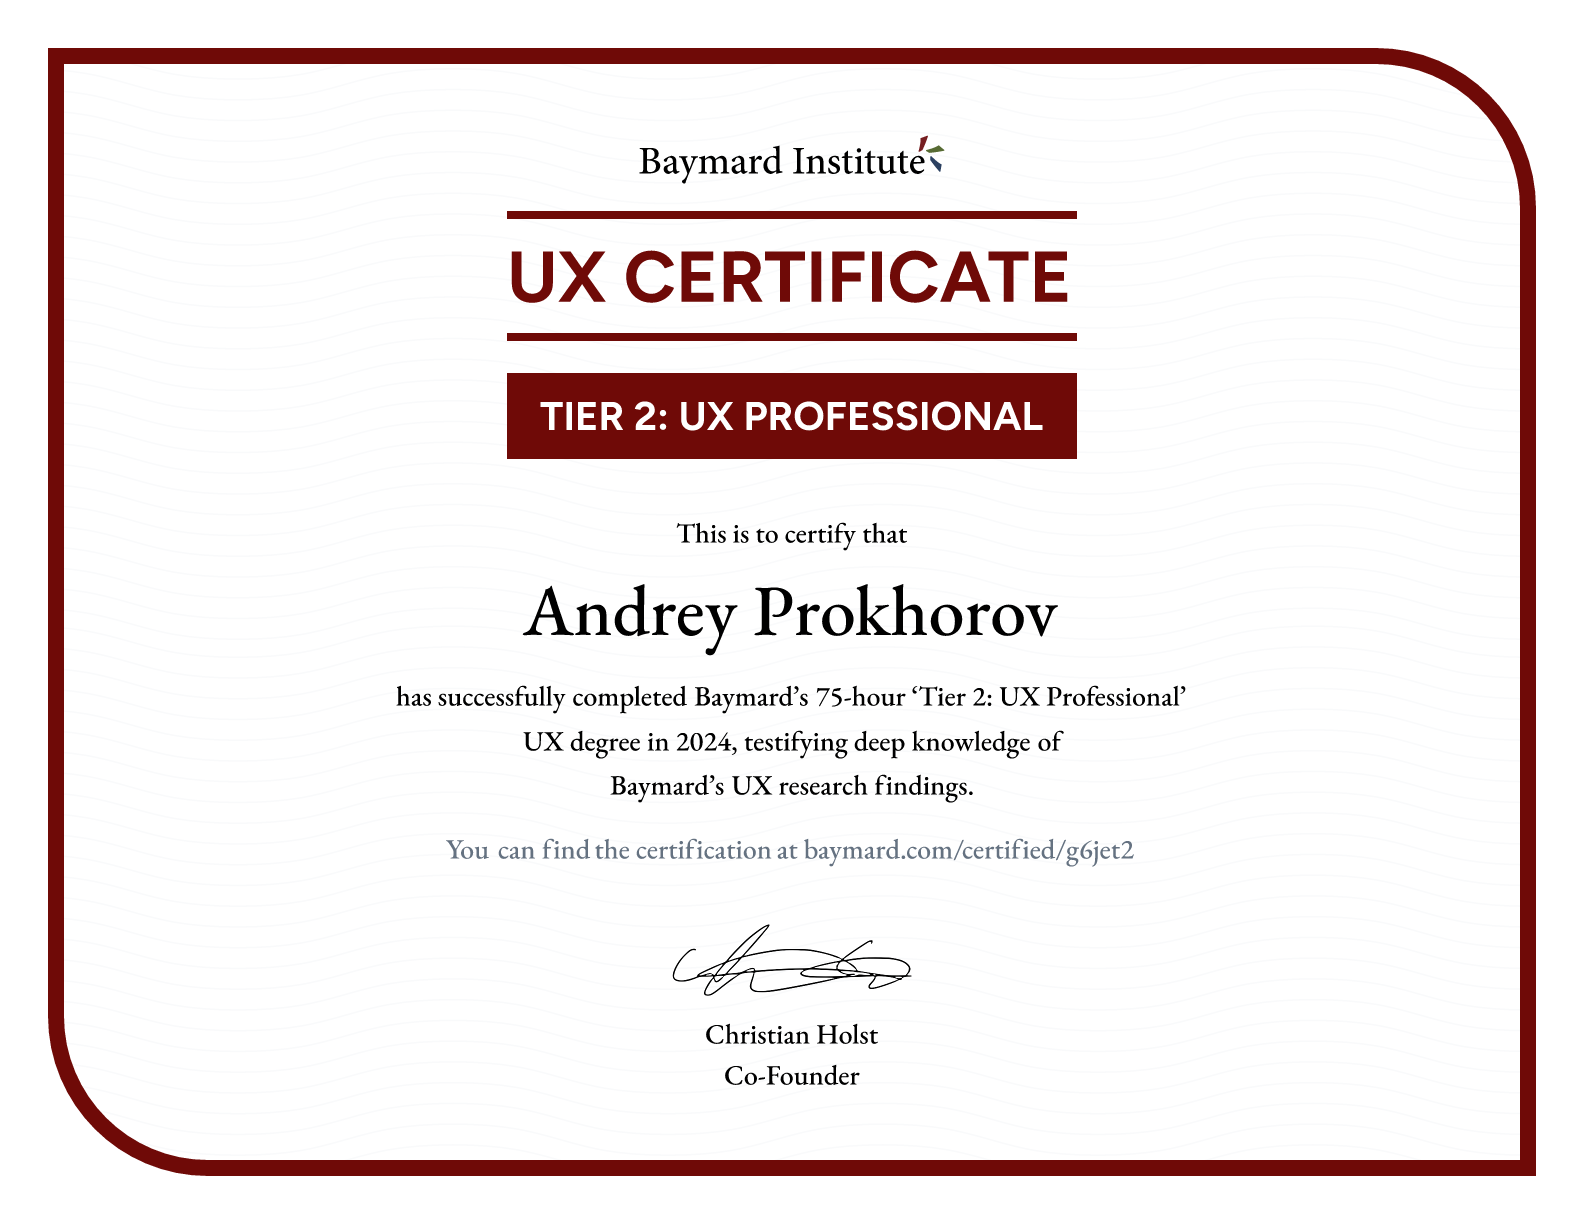 Andrey Prokhorov’s certificate